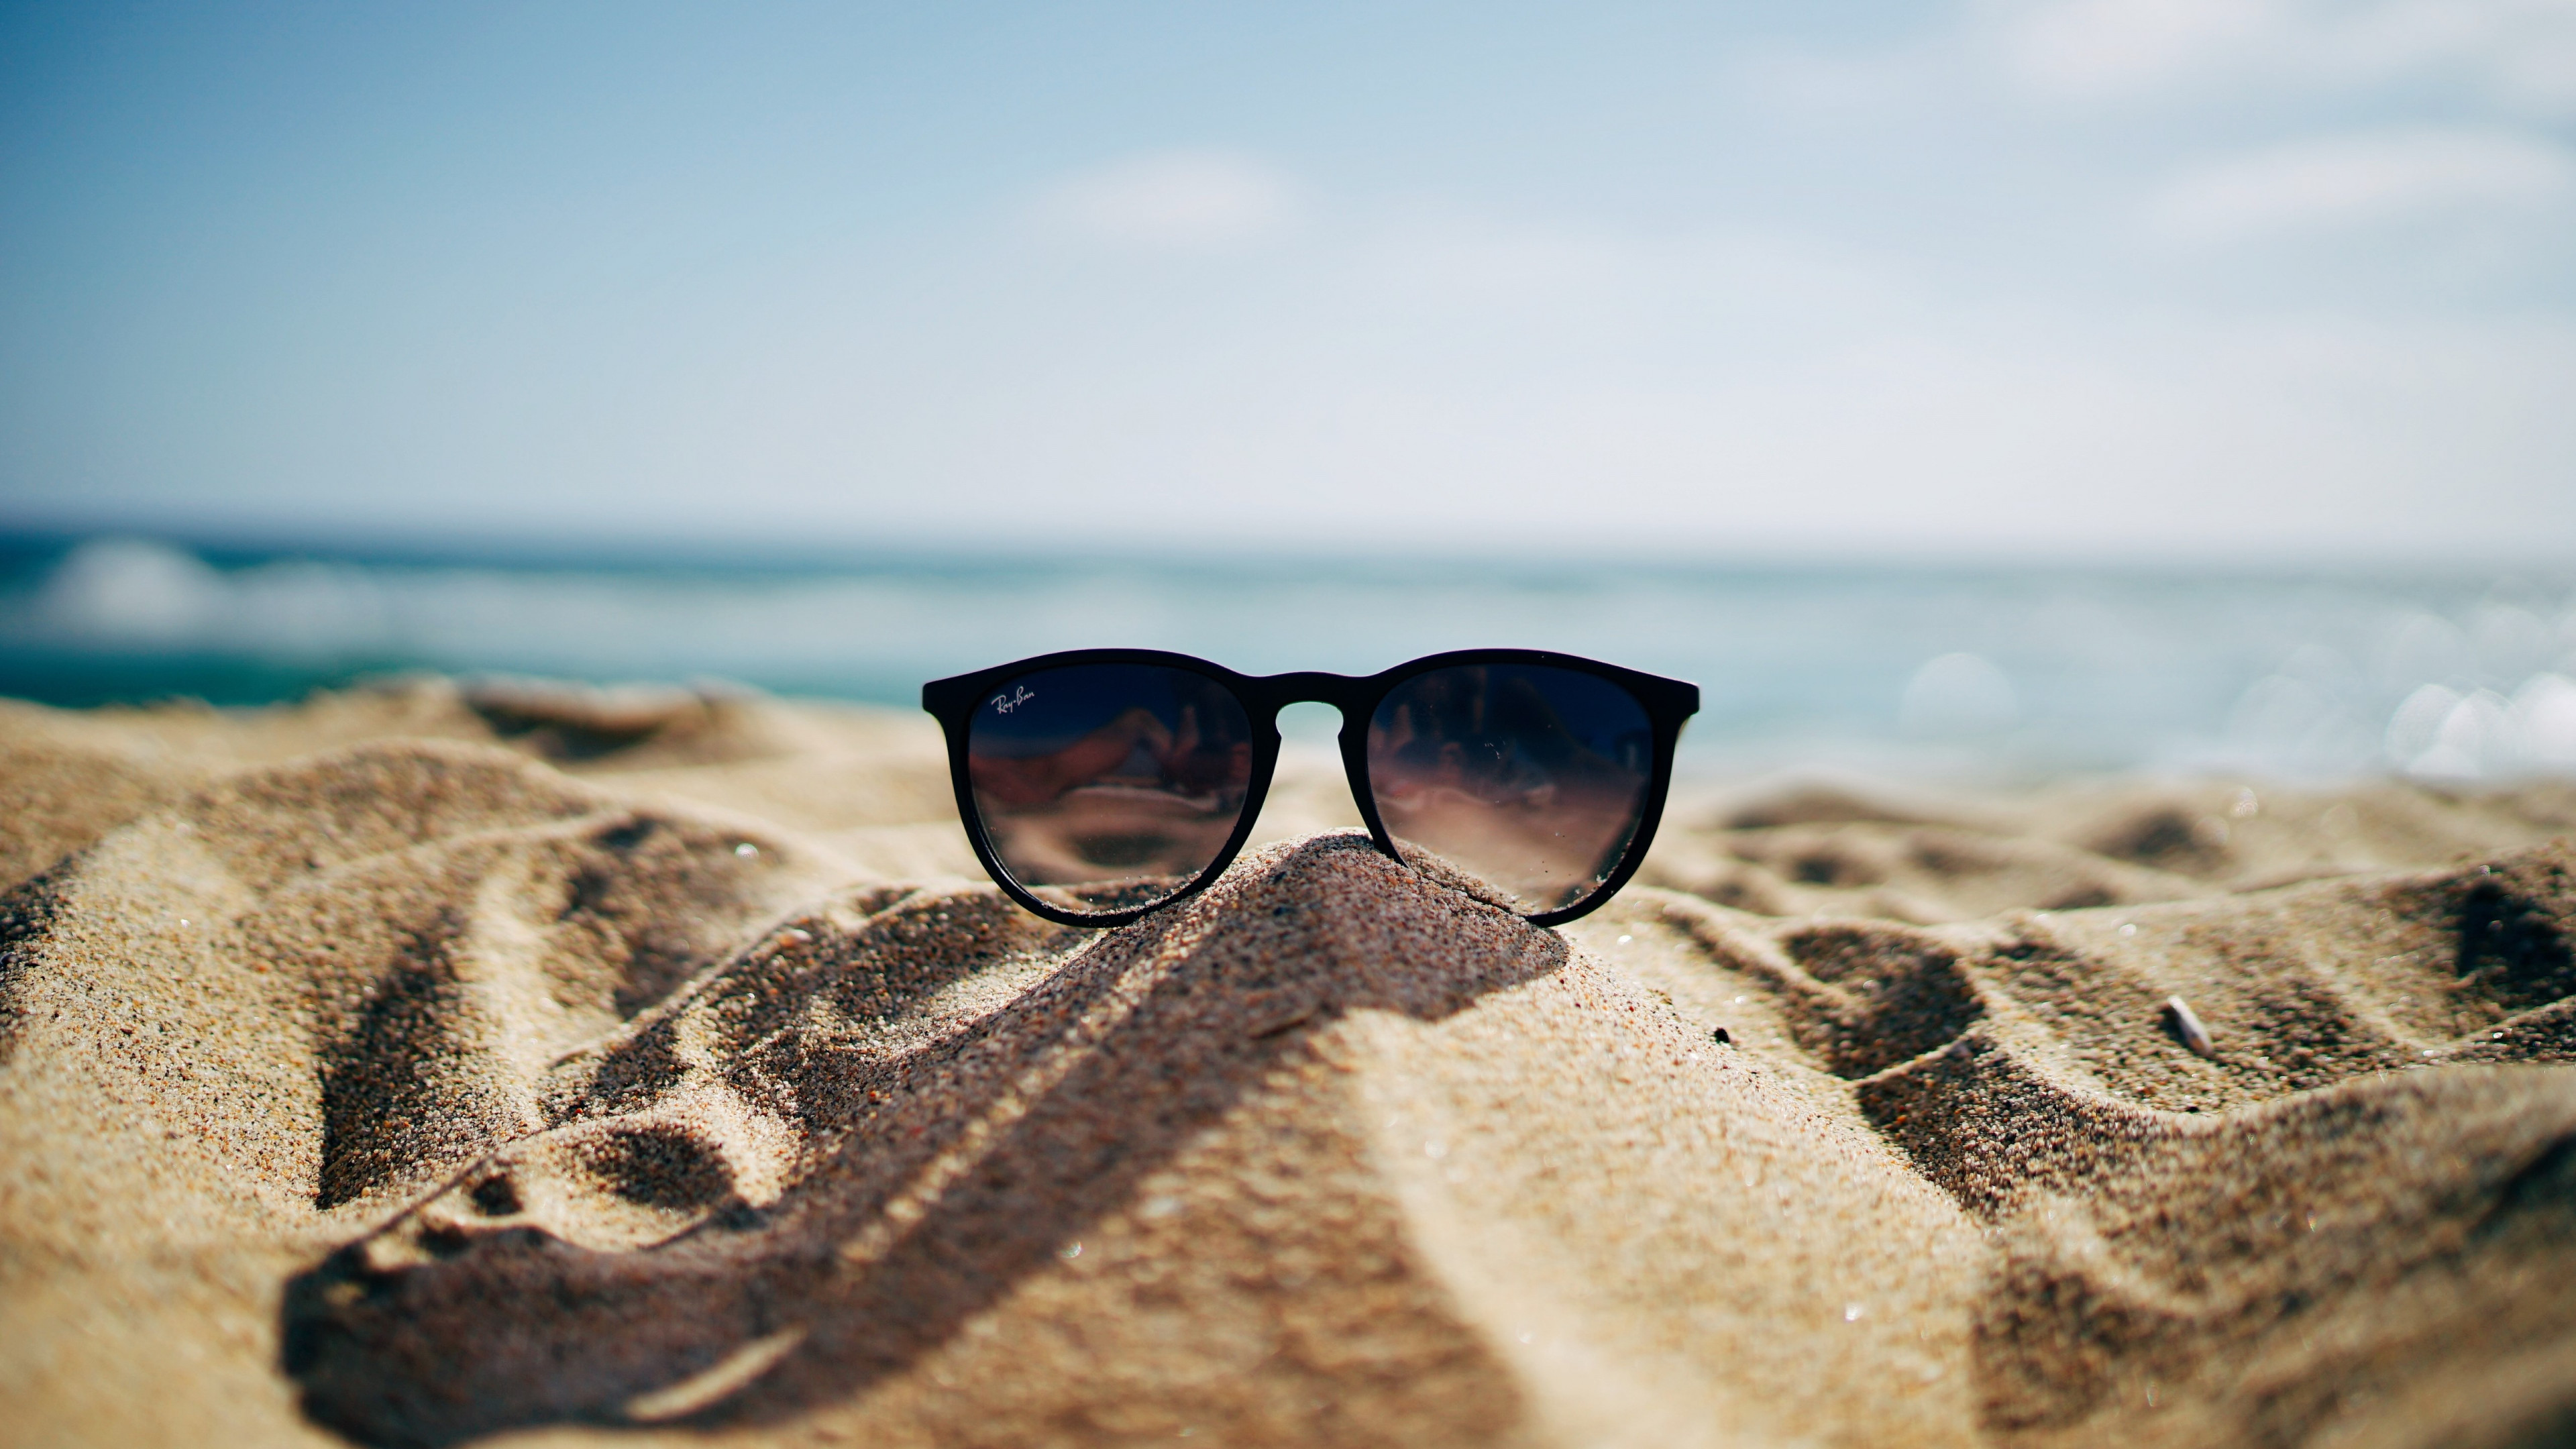 Ray Ban sunglasses on hot sand beach wallpaper 3840x2160